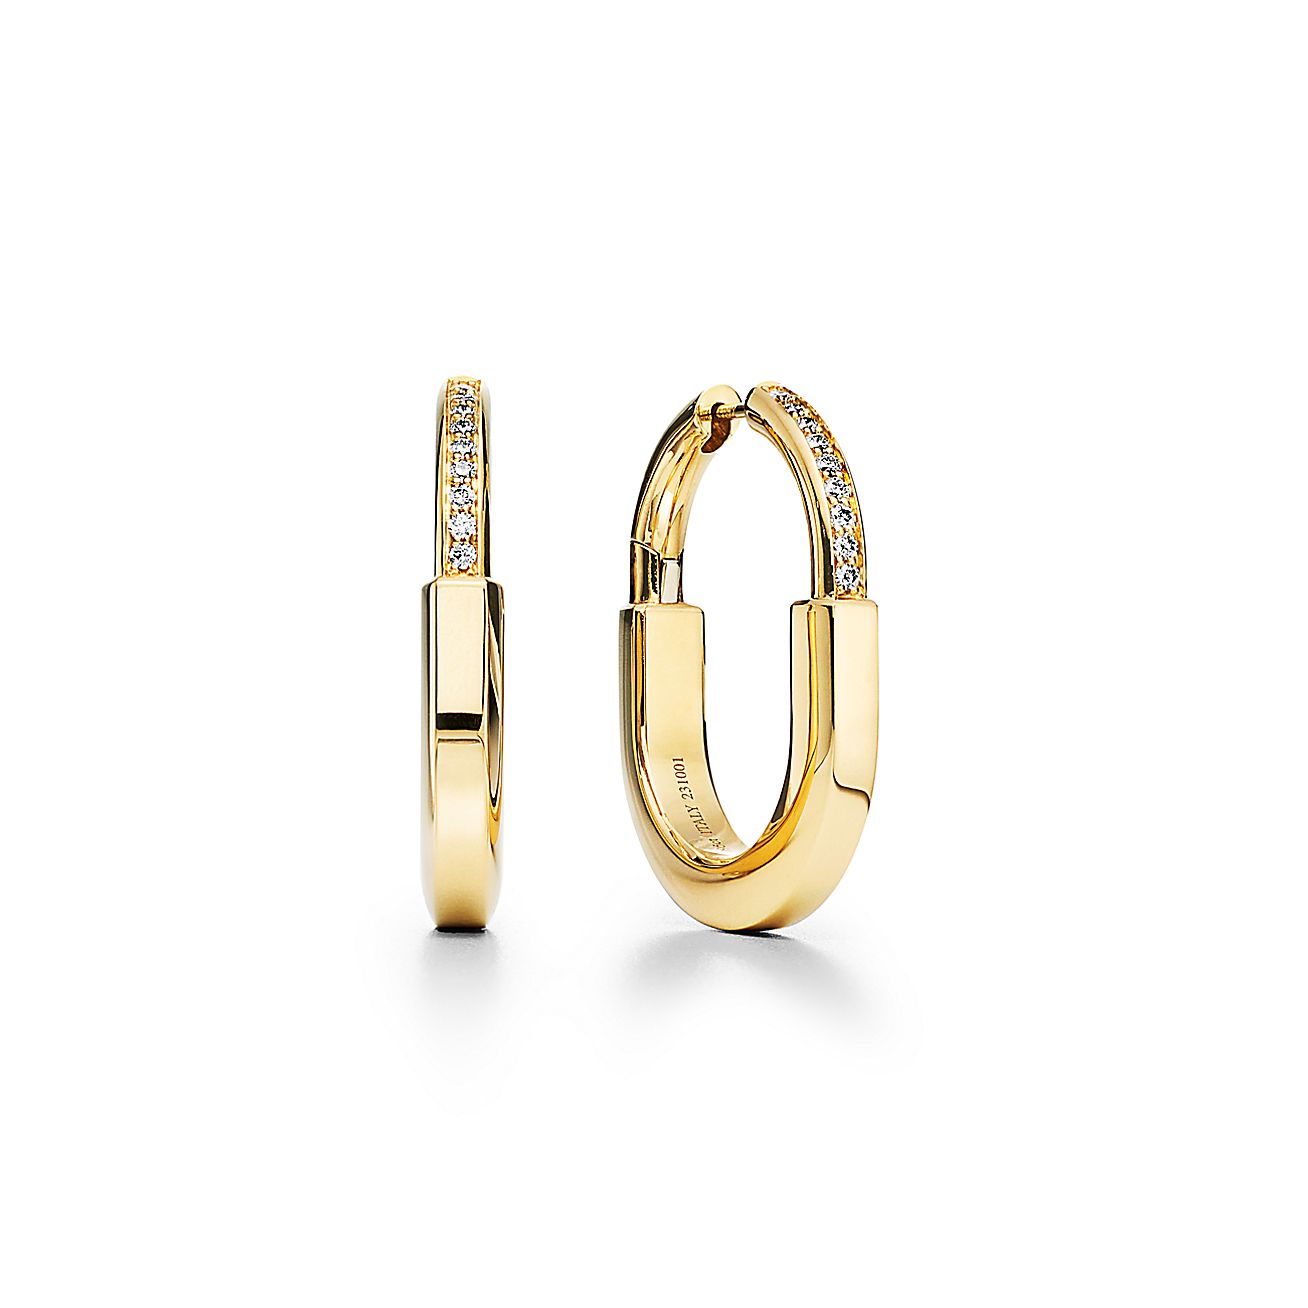 Tiffany Lock Earrings in Yellow Gold with Diamonds, Medium